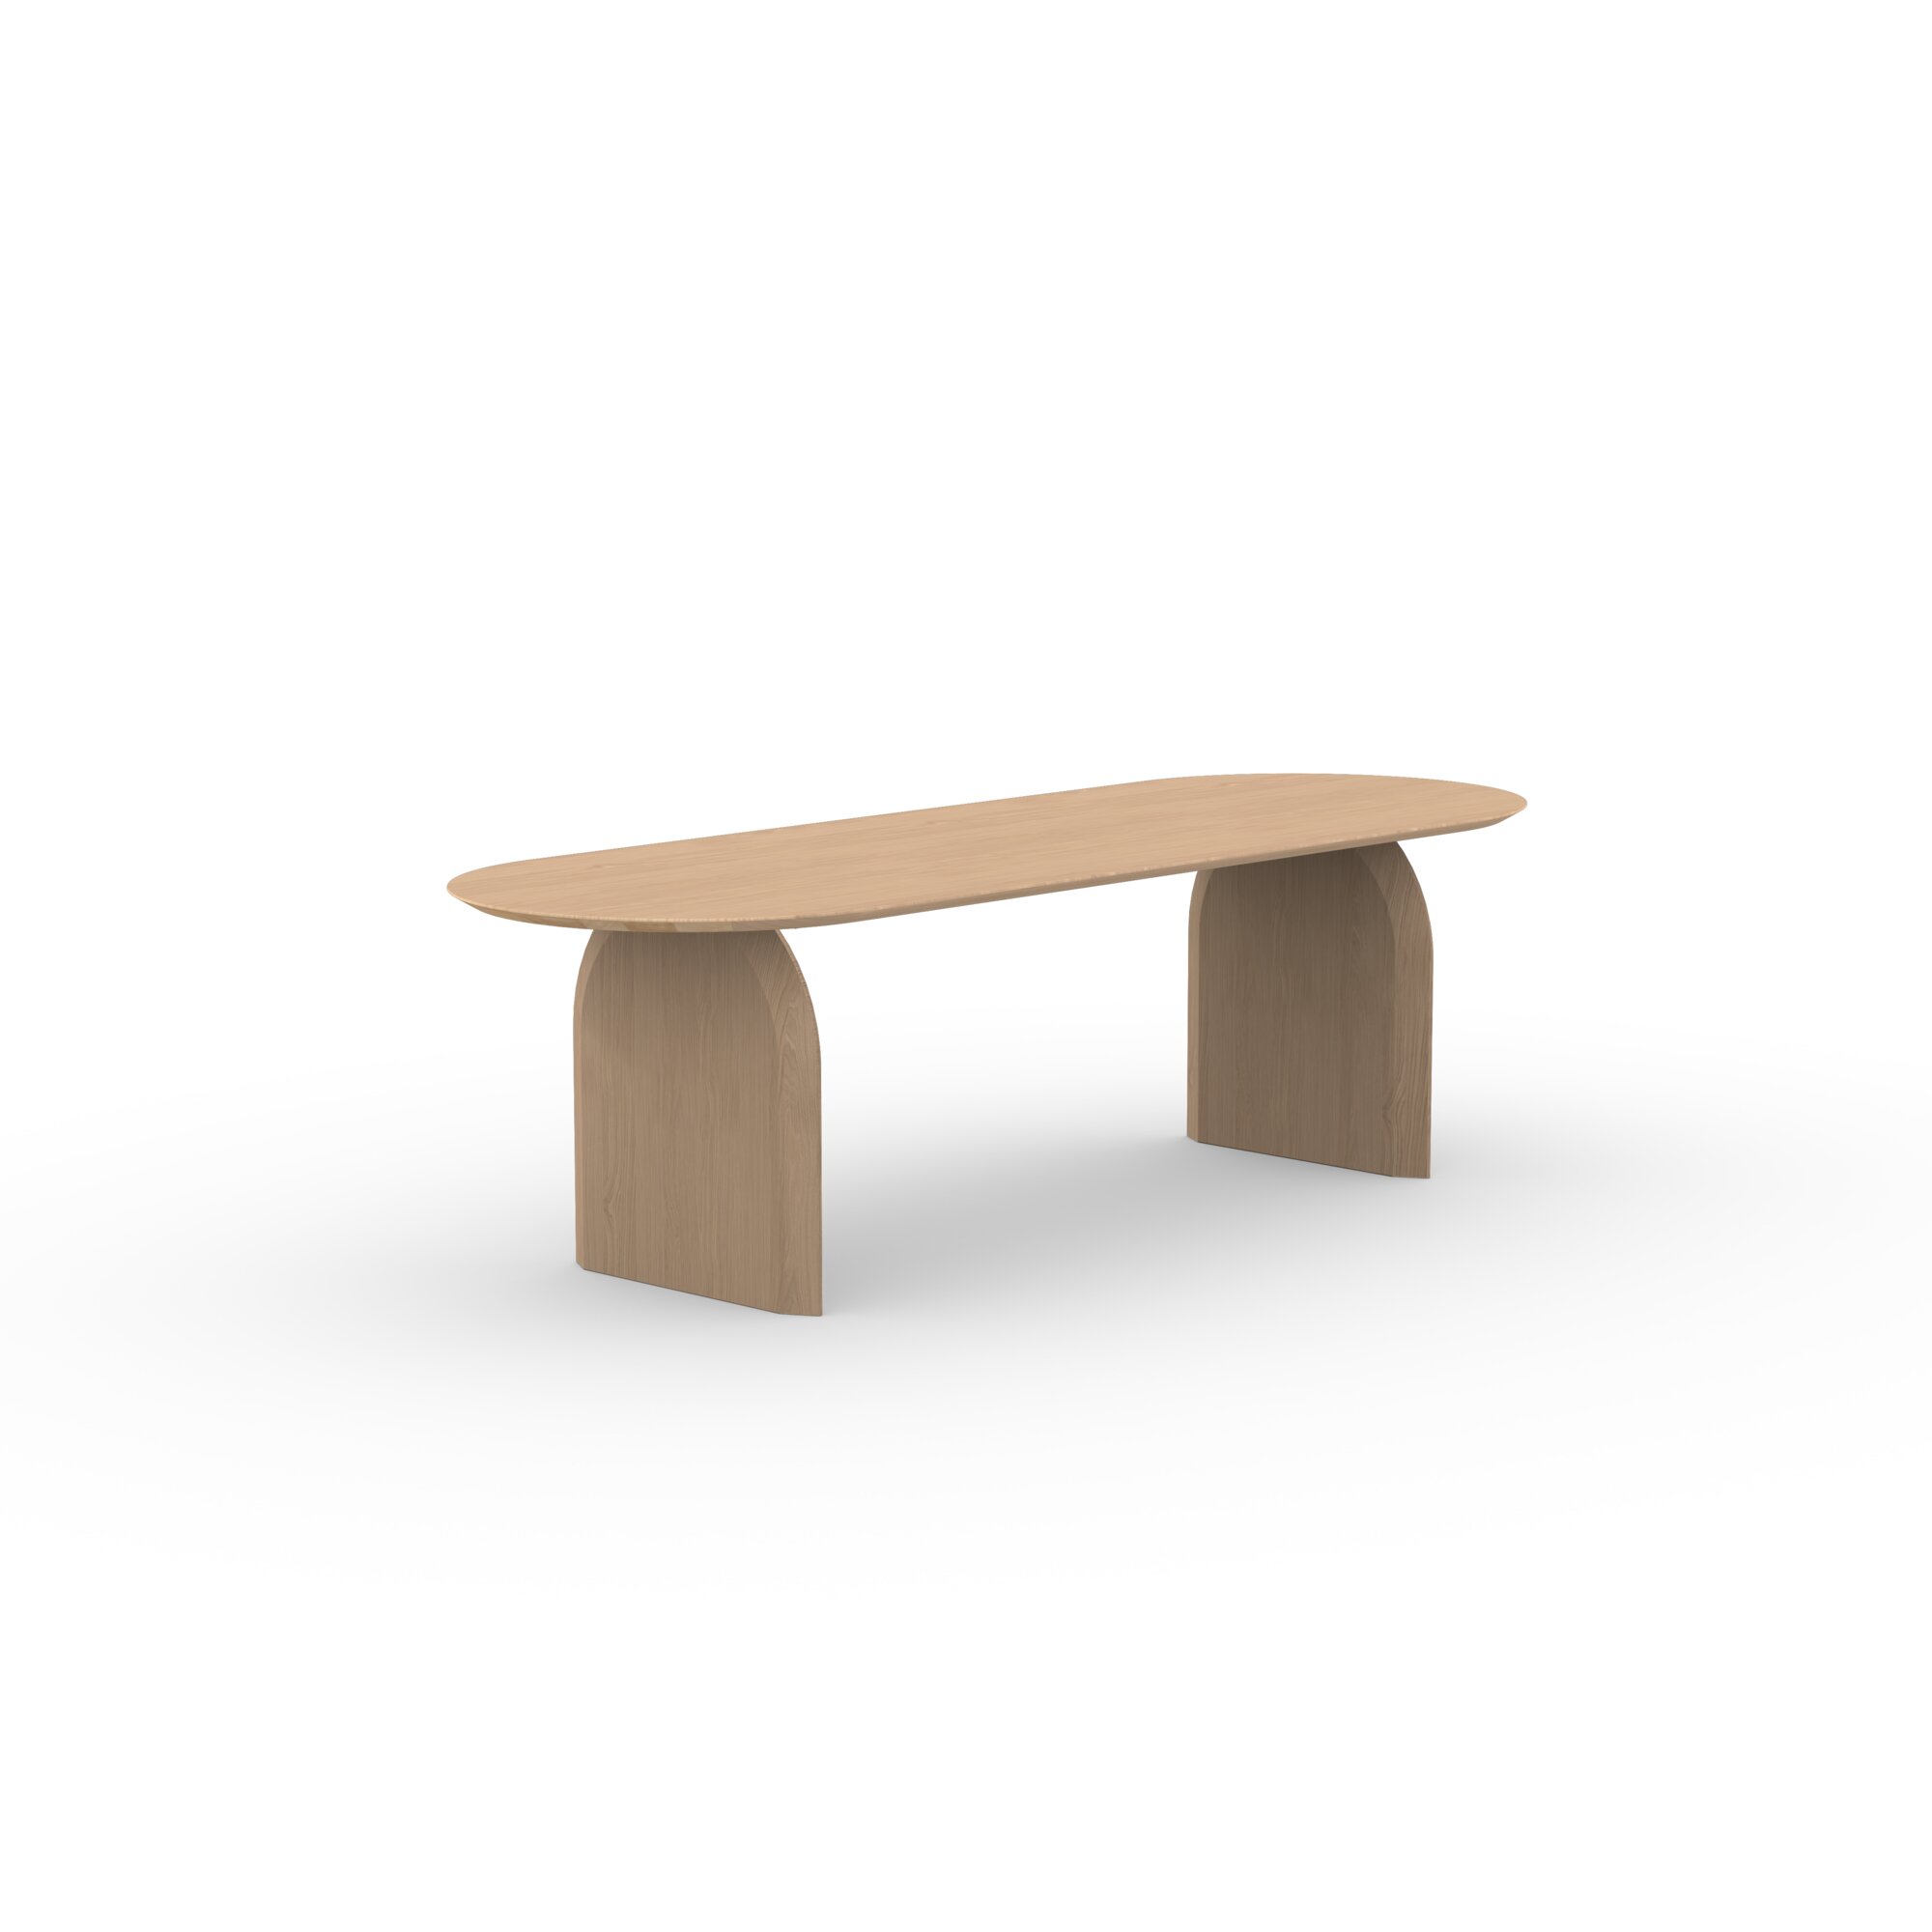 Flat oval Design dining table | Slot Oak hardwax oil natural light | Oak hardwax oil natural light | Studio HENK| 